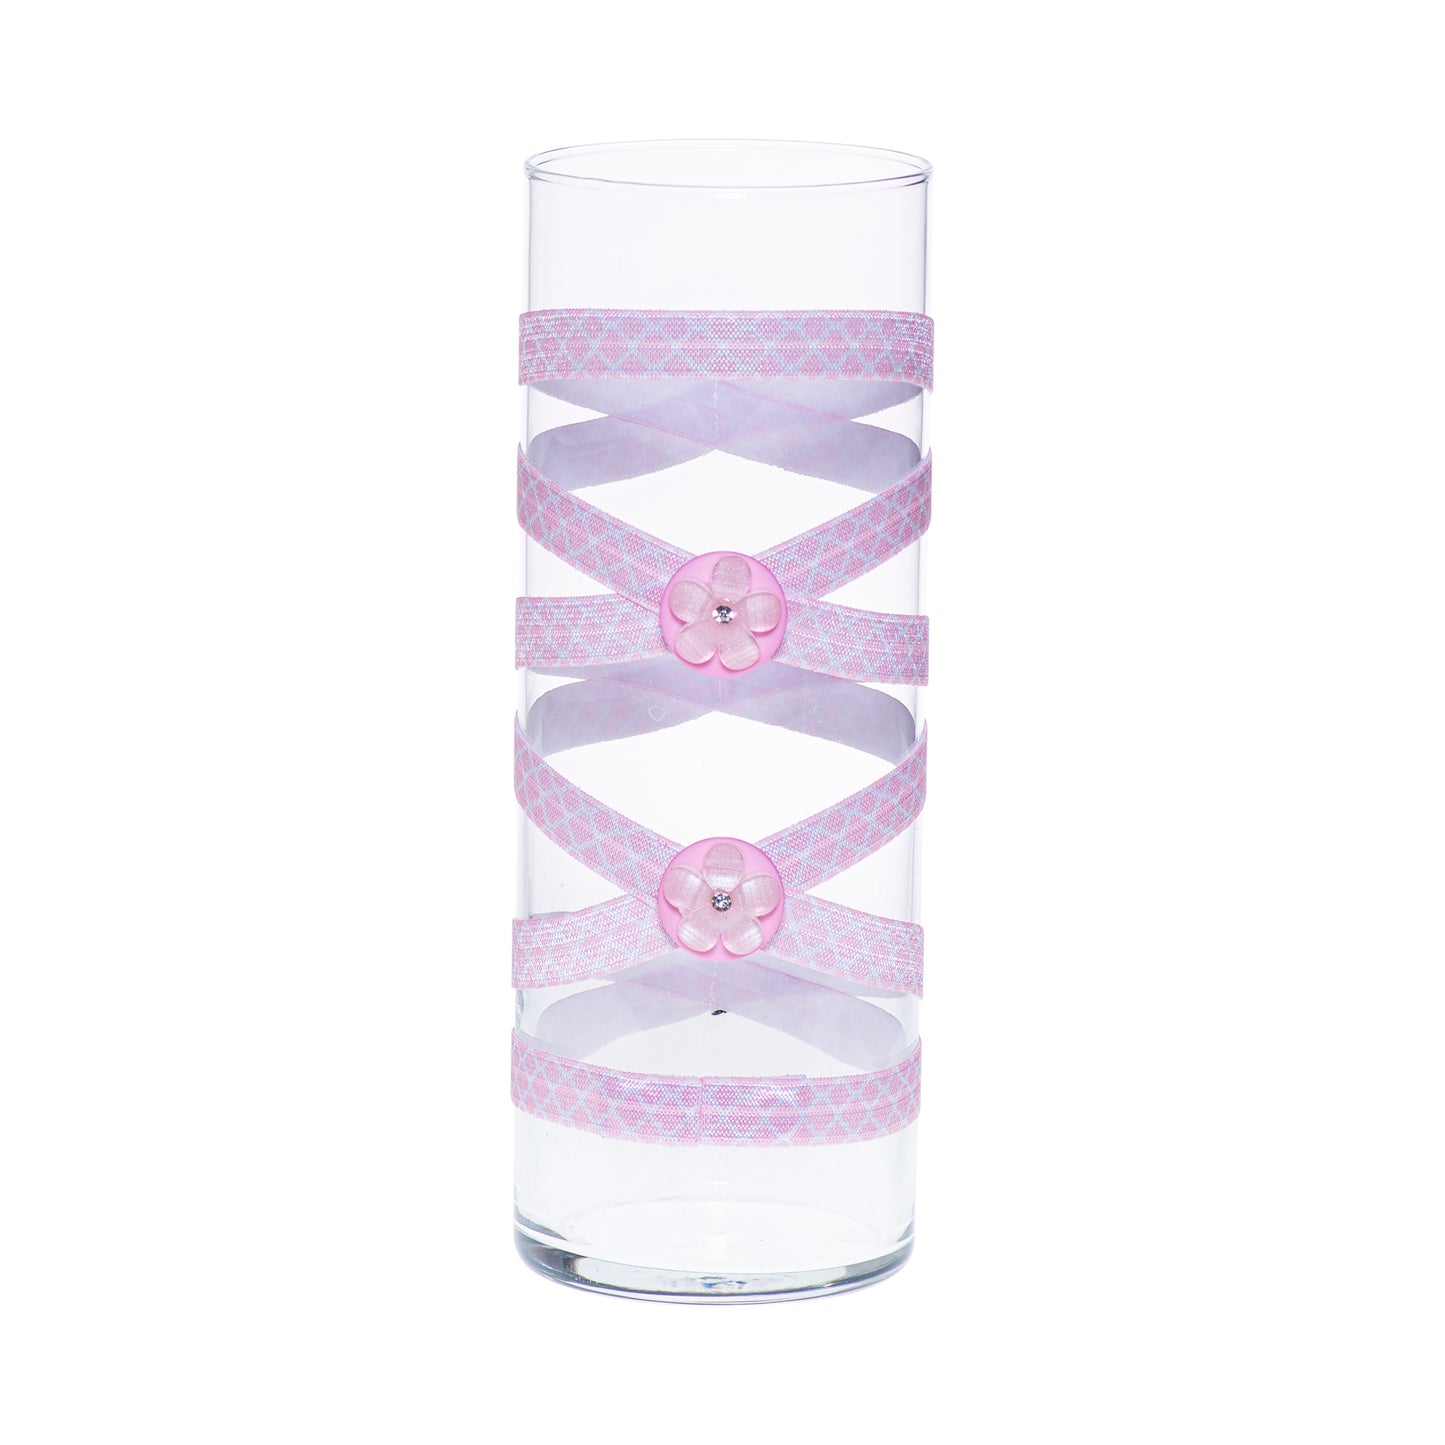 3.5" x 9.5" Vase Pink White Quatrefoil 5X 5 Pink White Gem Flowers Valentine Love Collection Complete Set